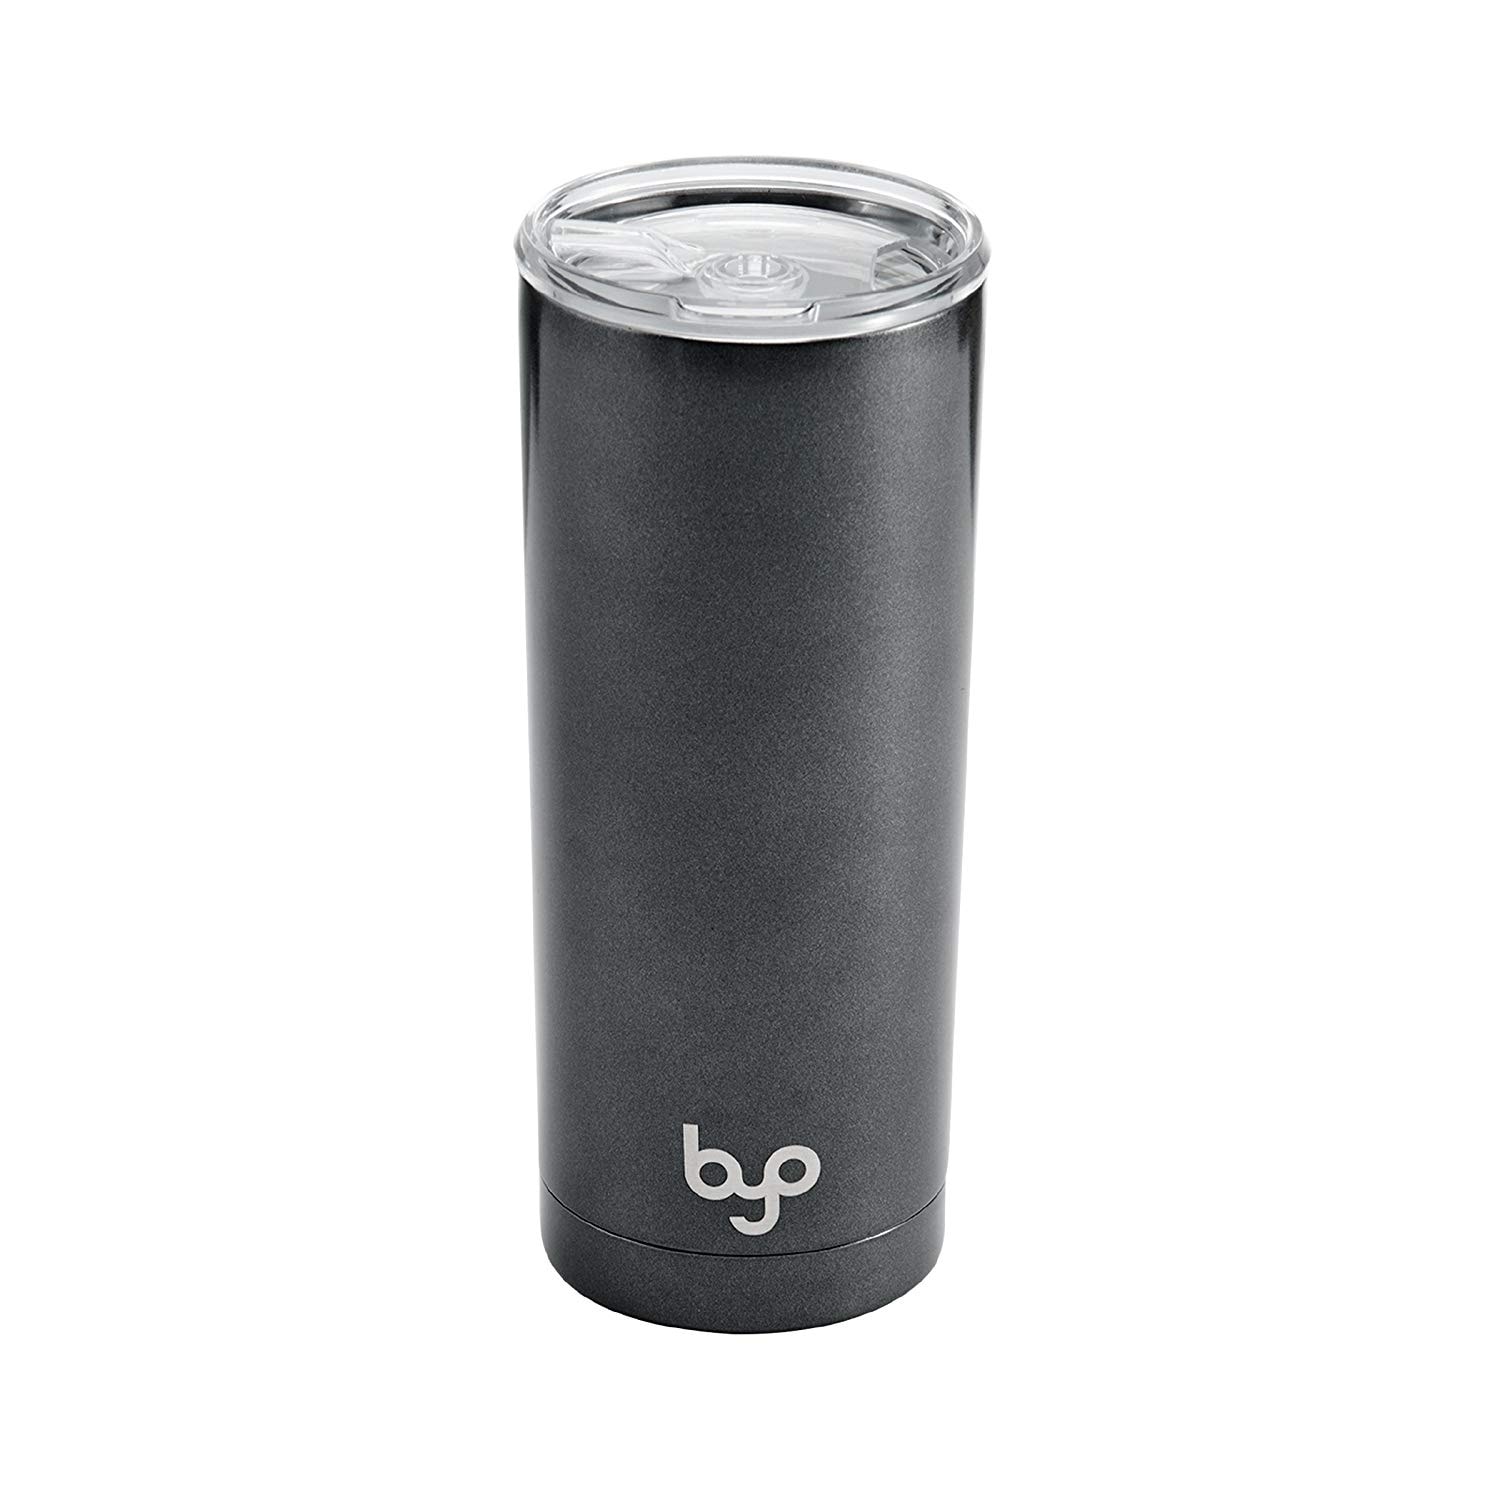 BYO 5212988 Tumbler Insulated BPA Free